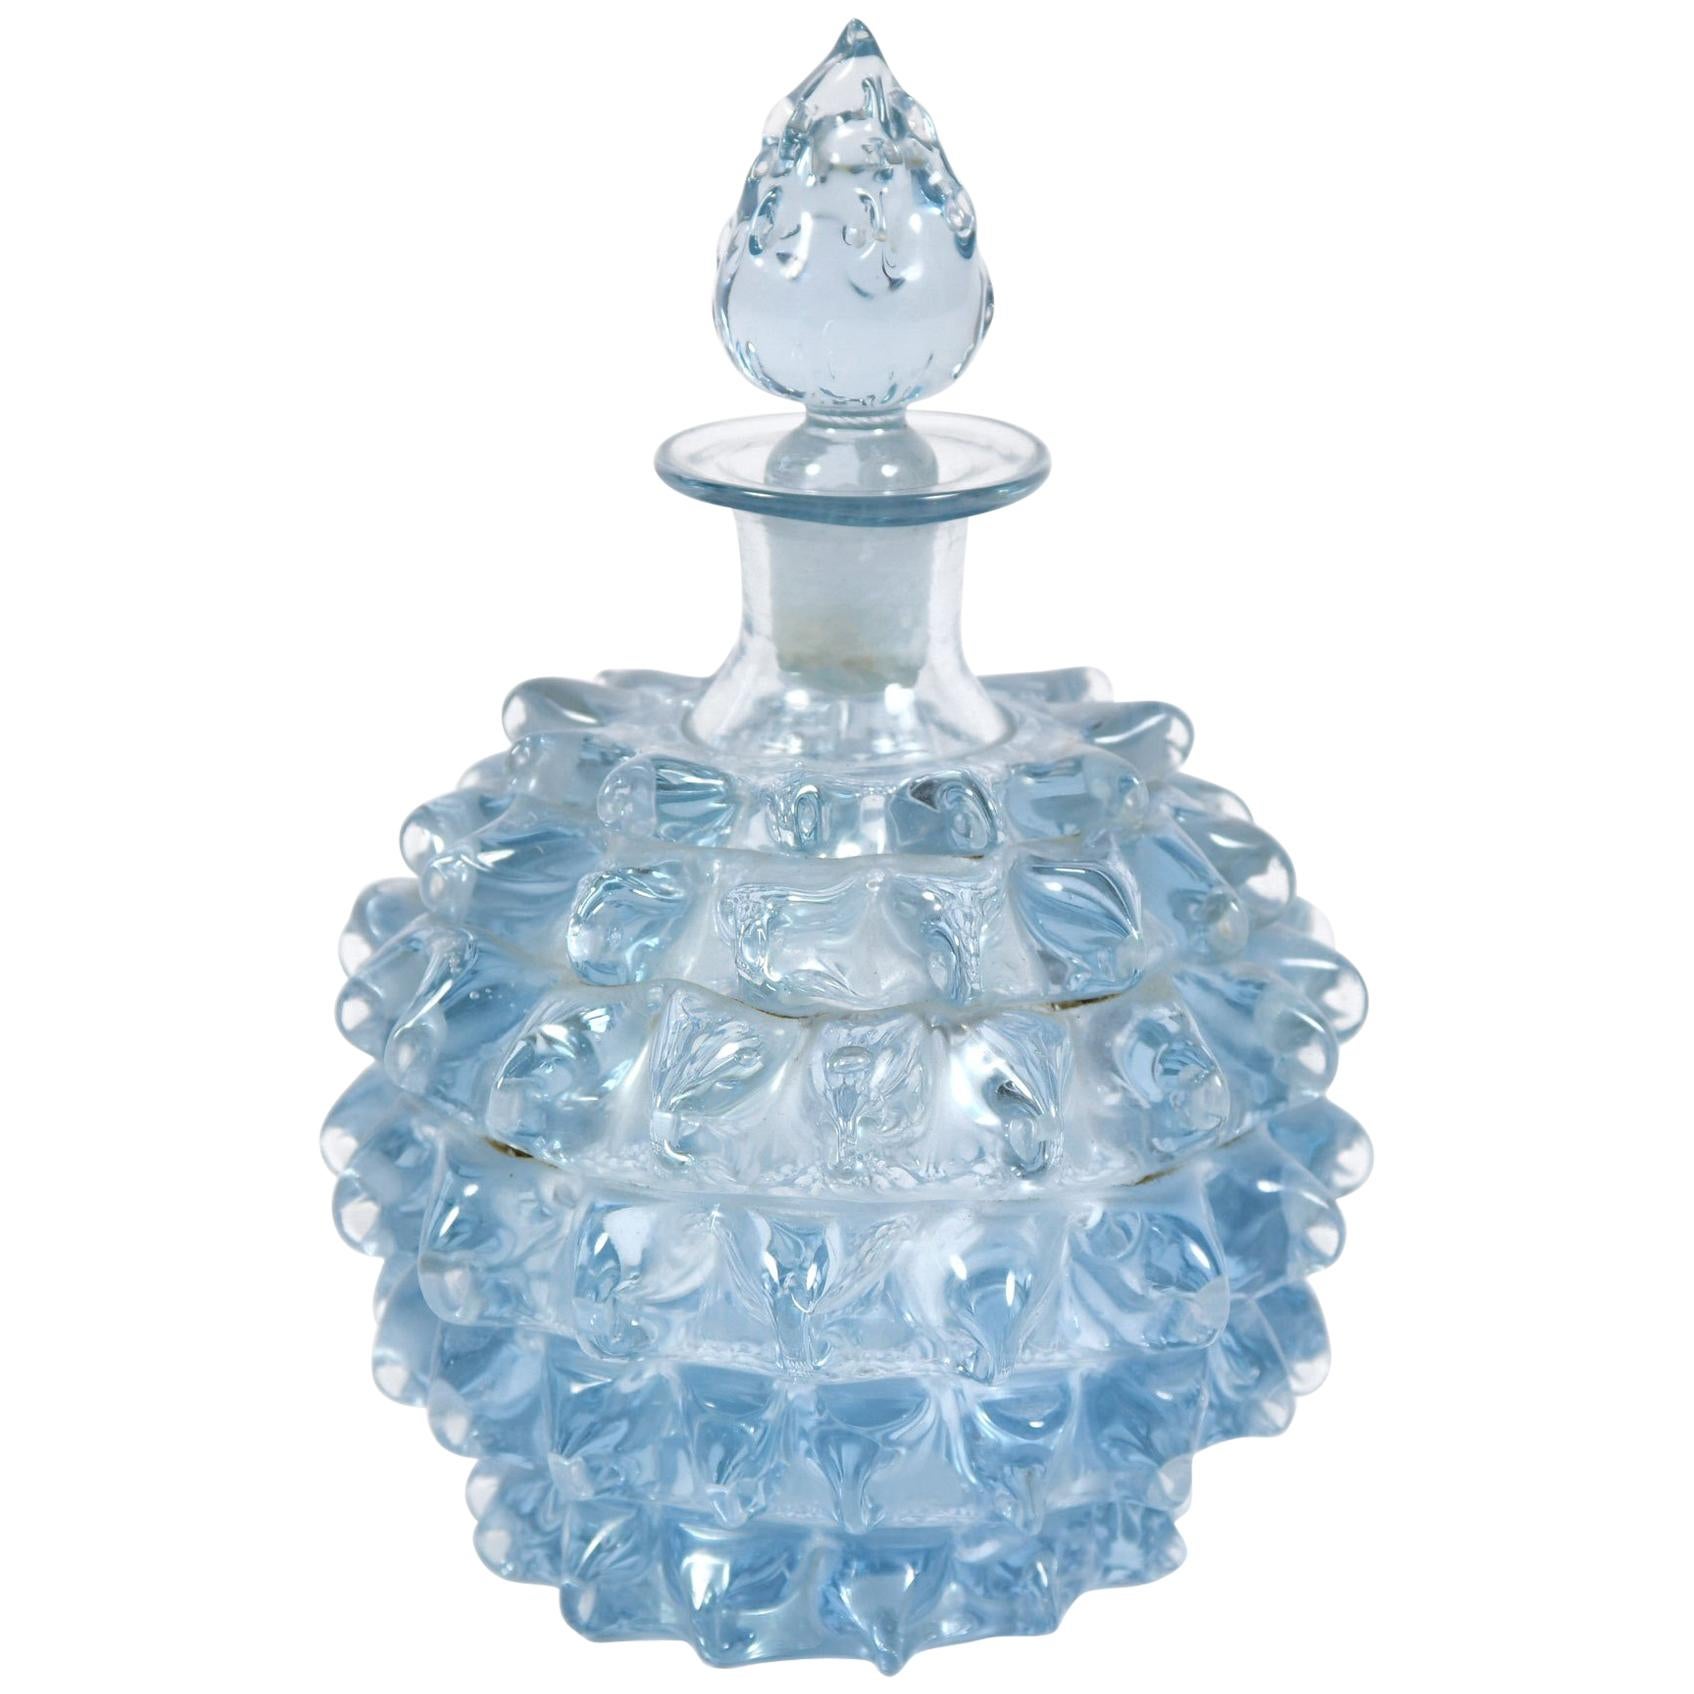 Italian 1950s Barovier e Toso Blue Murano Glass Perfume Bottle